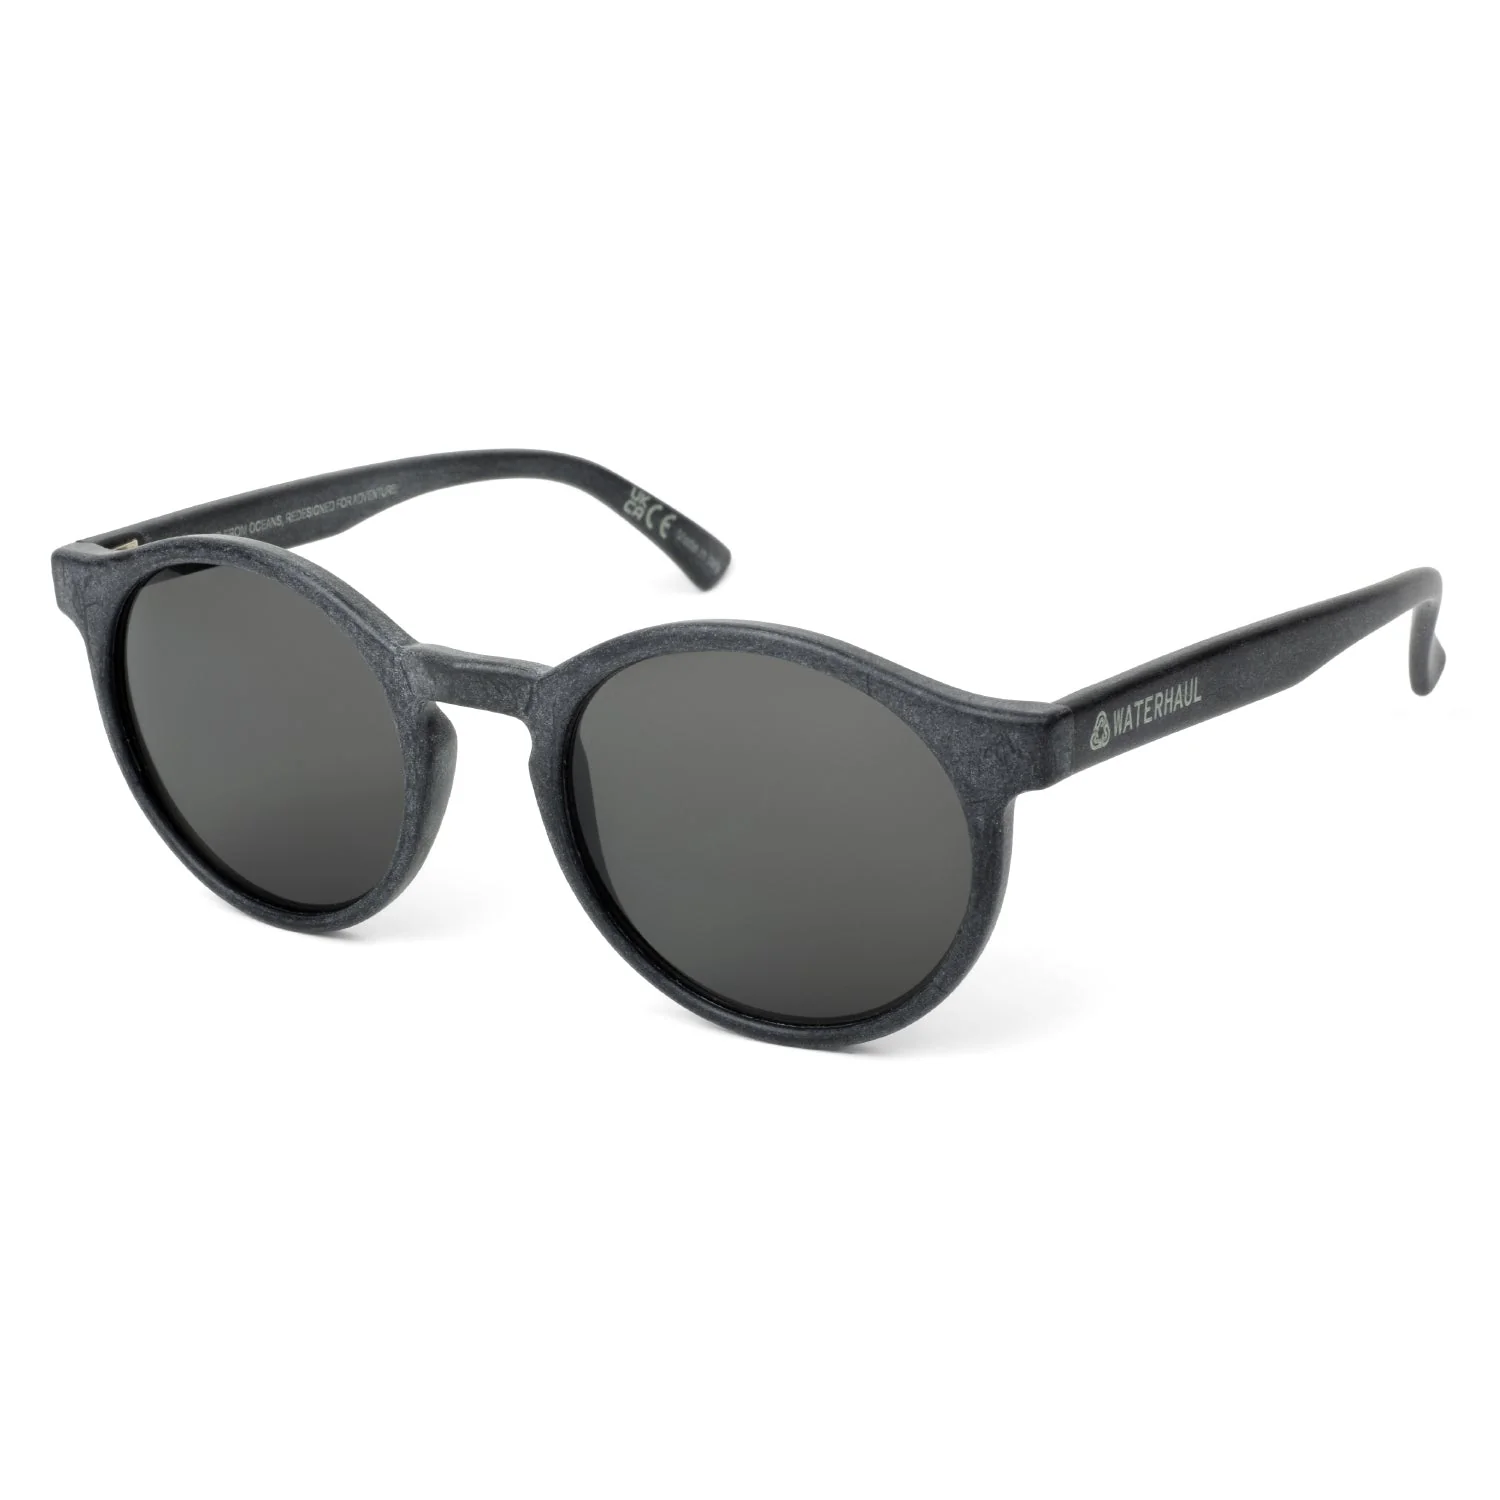 Waterhaul - Harlyn (Slate) Sustainable sunglasses